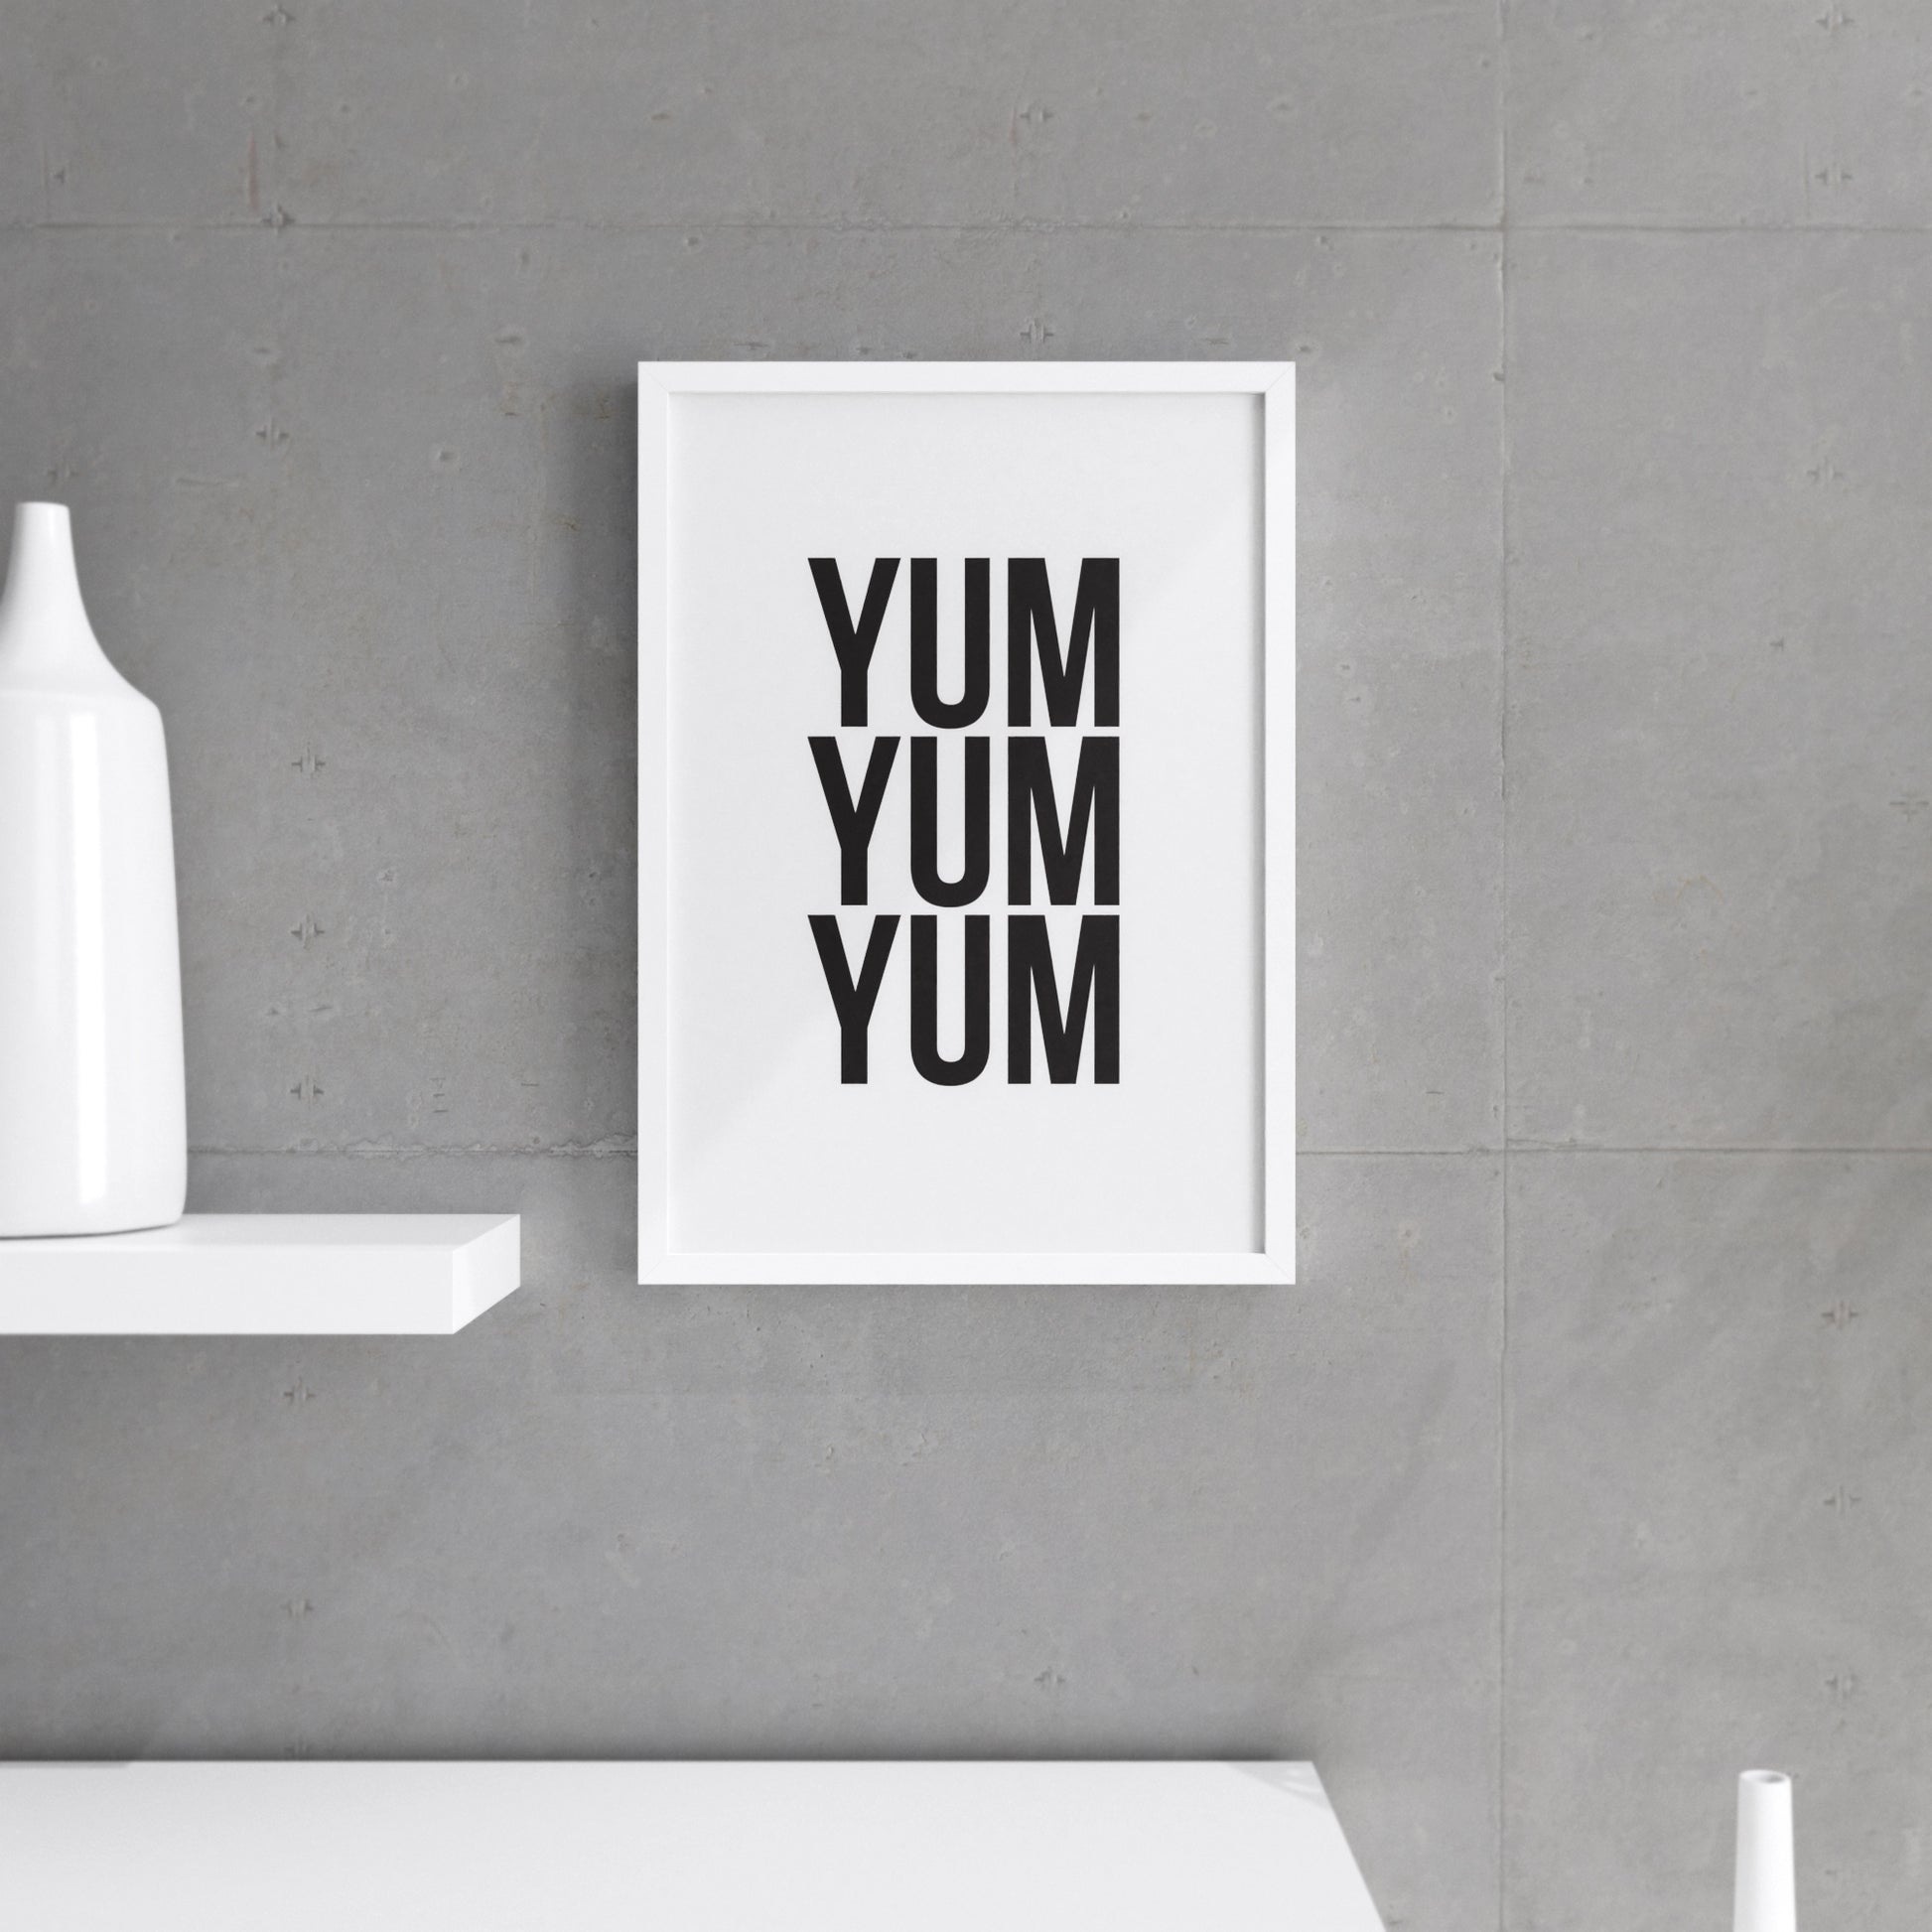 Yum yum yum Text wall decor, kitchen wall print gift idea